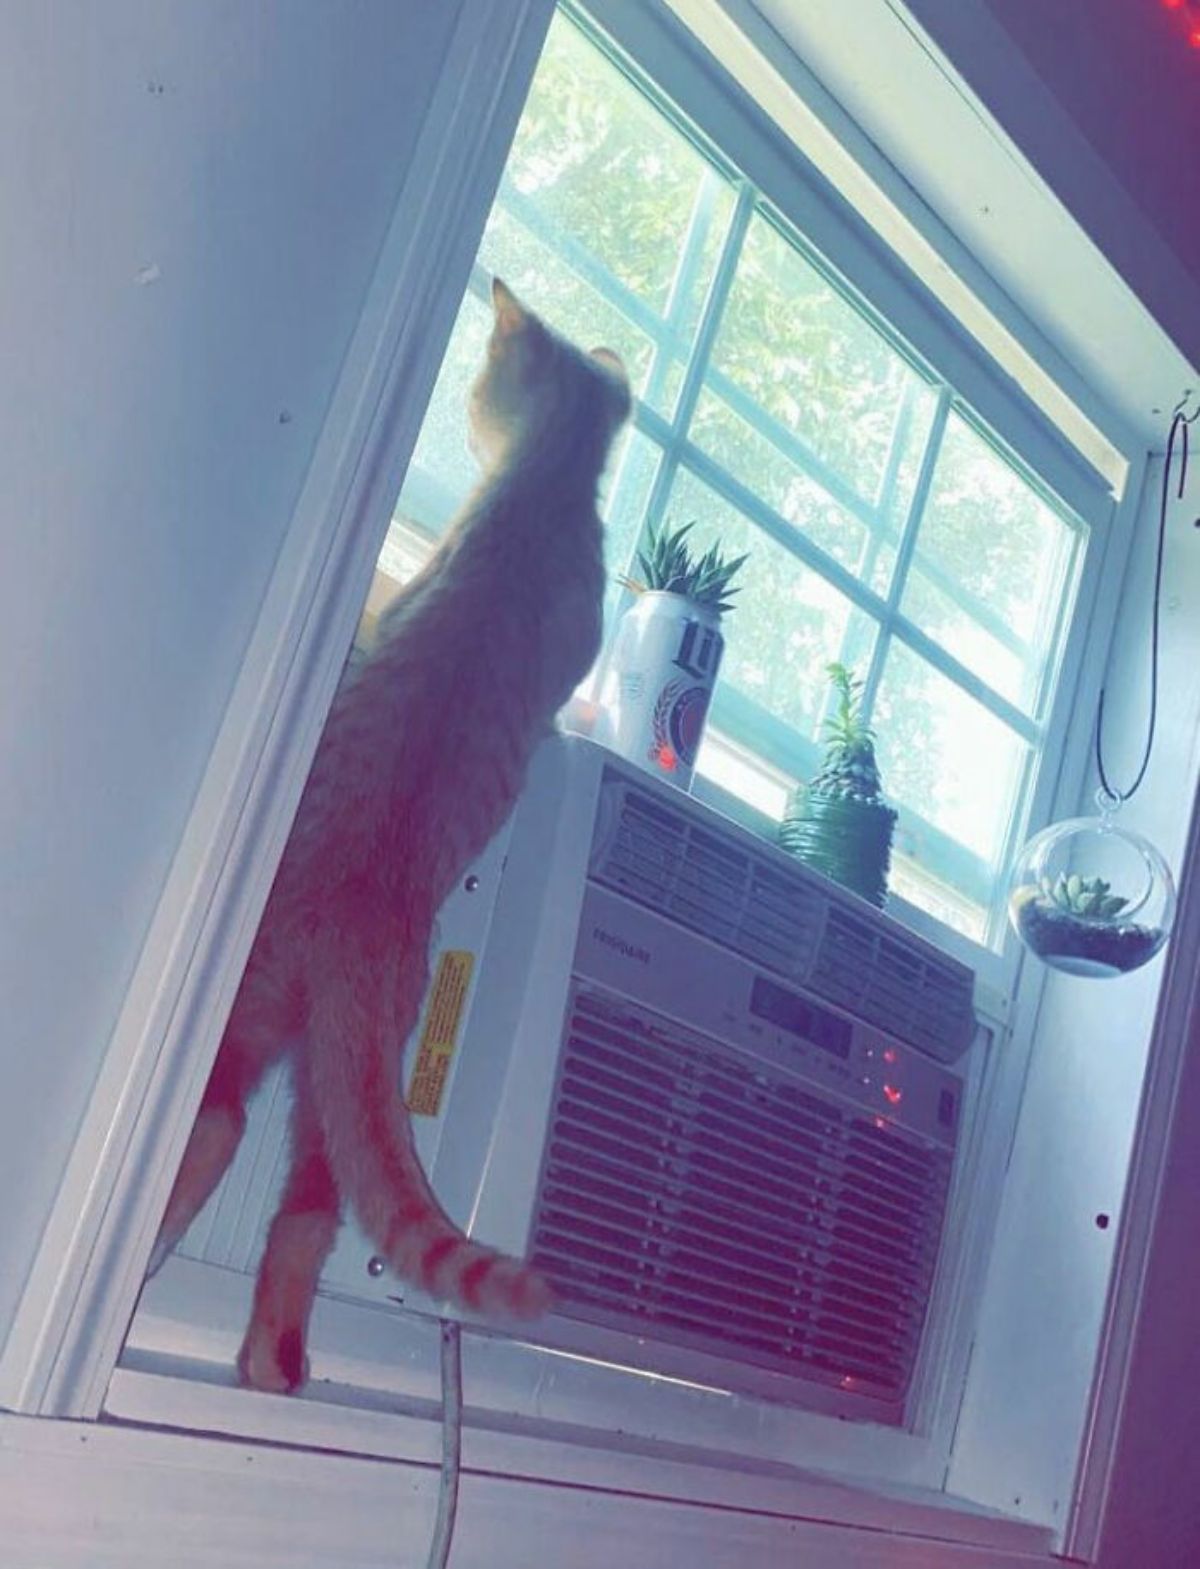 orange kitten standing on a window ledge and peeking out of a window